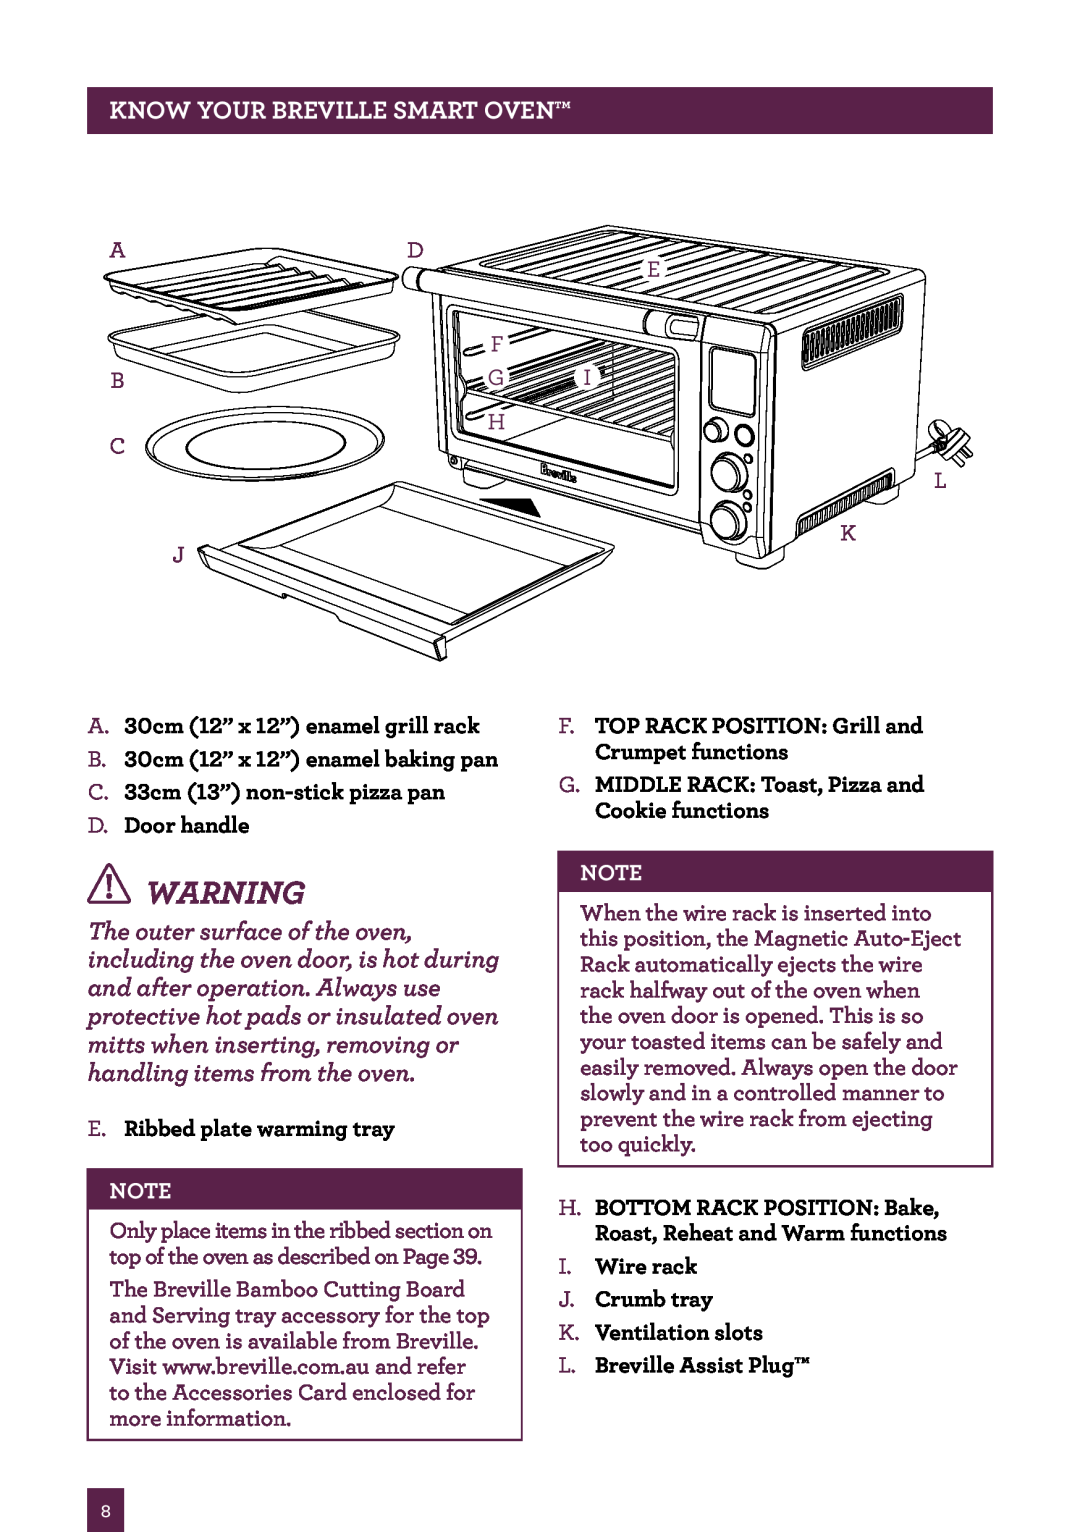 Breville BOV800 manual KNOW YOUR Breville Smart Oven, A. 30cm 12” x 12” enamel grill rack, D. Door handle 